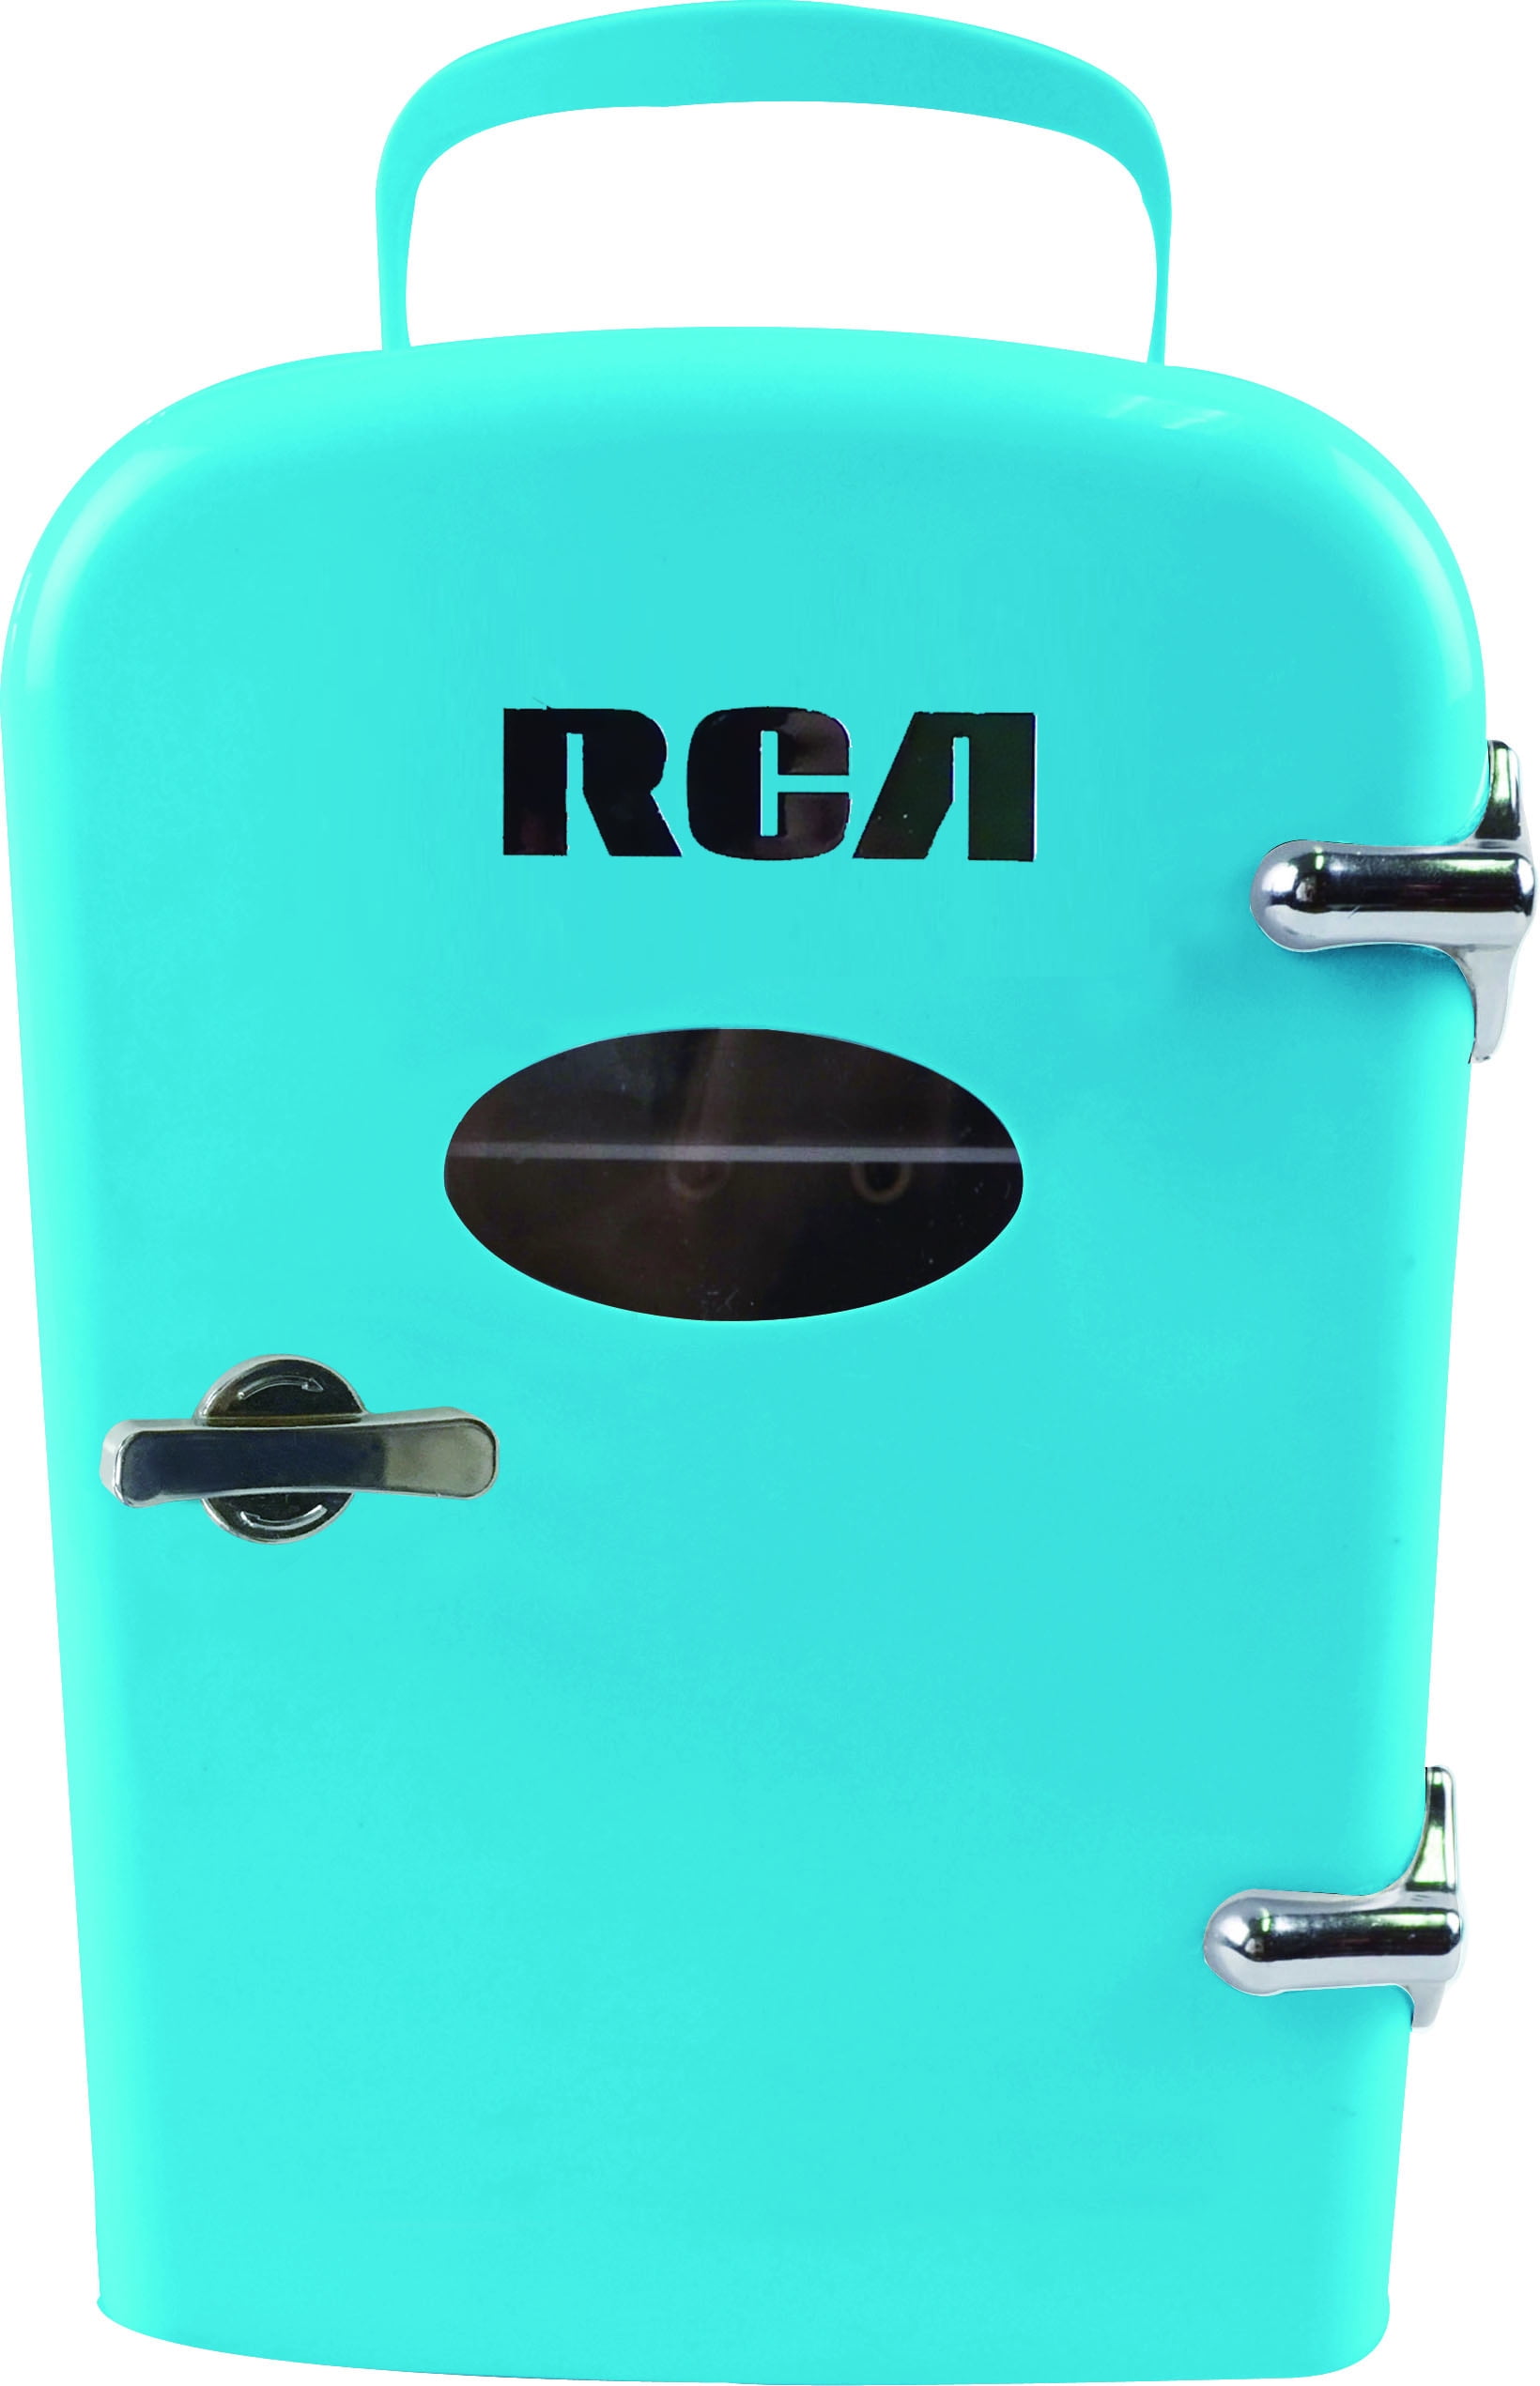 RCA Mini Fridge - 1.6 cu ft - Blue